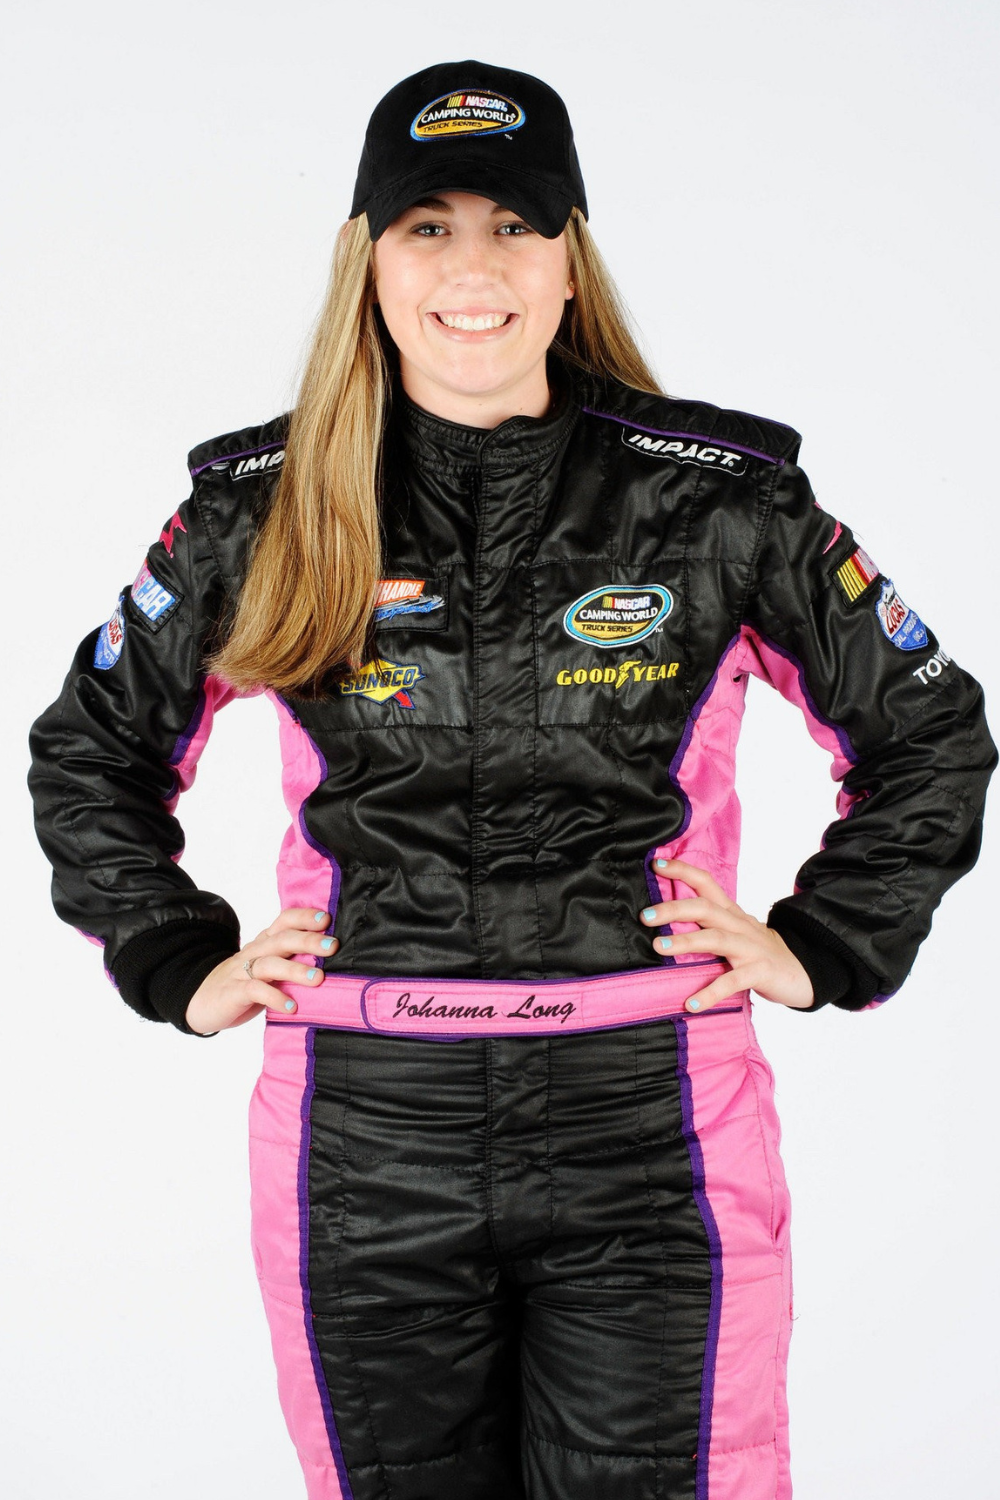 A Professional Stock Car Racer, Johanna Robbins